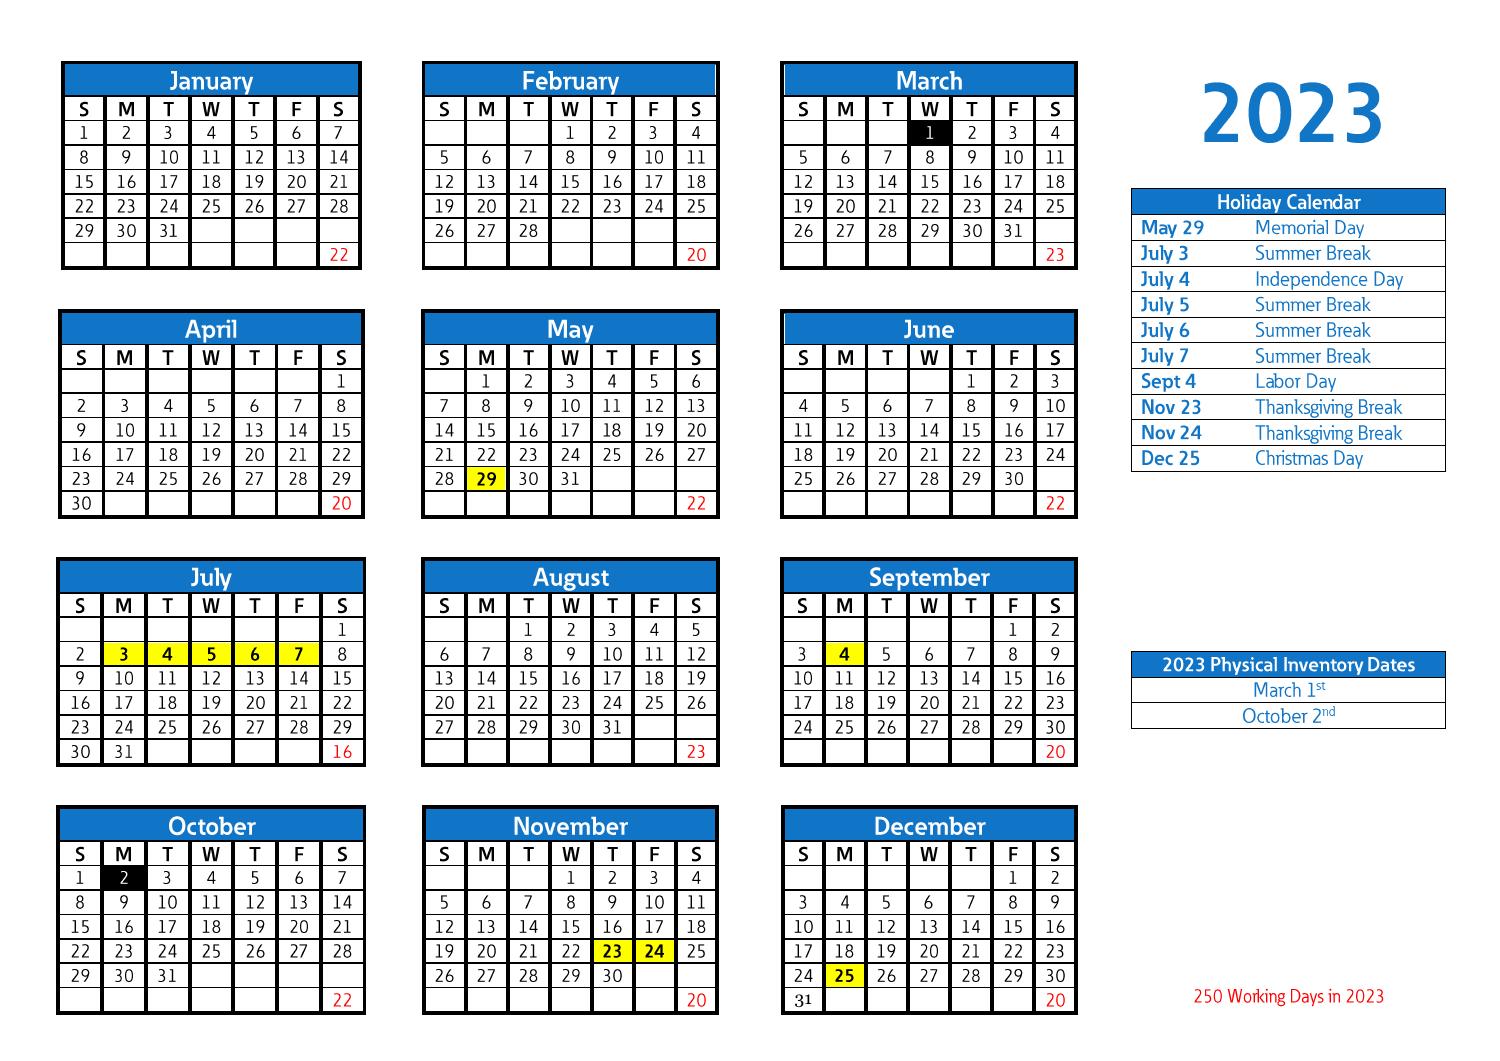 2023 Holiday Calendar Hodges.pdf DocDroid